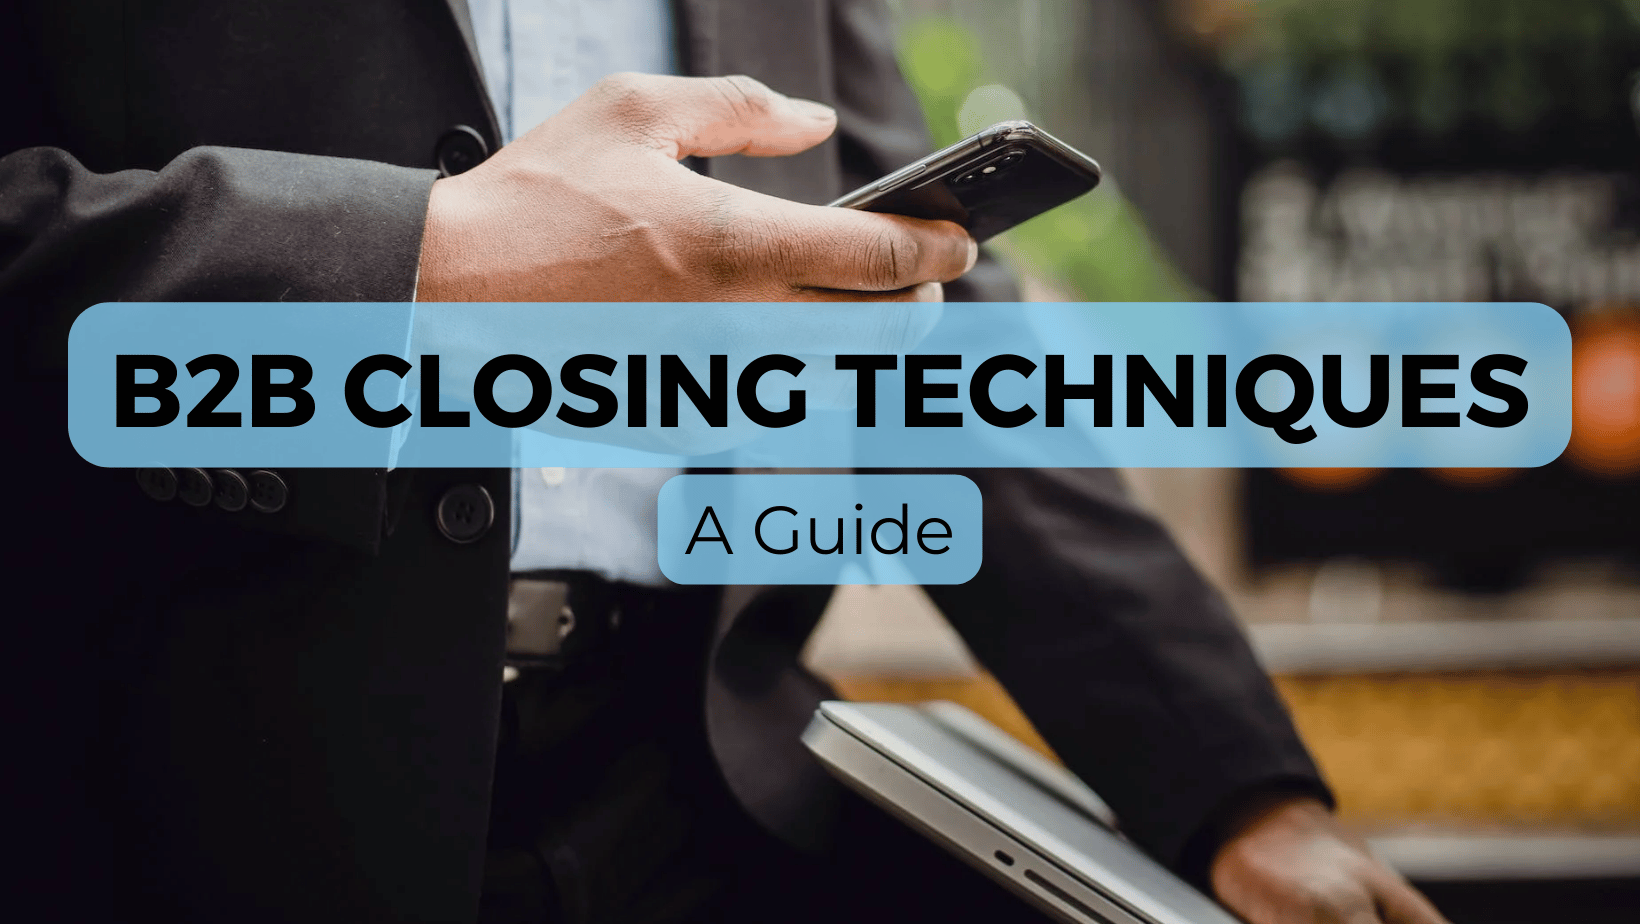 B2B Closing Techniques: A Guide